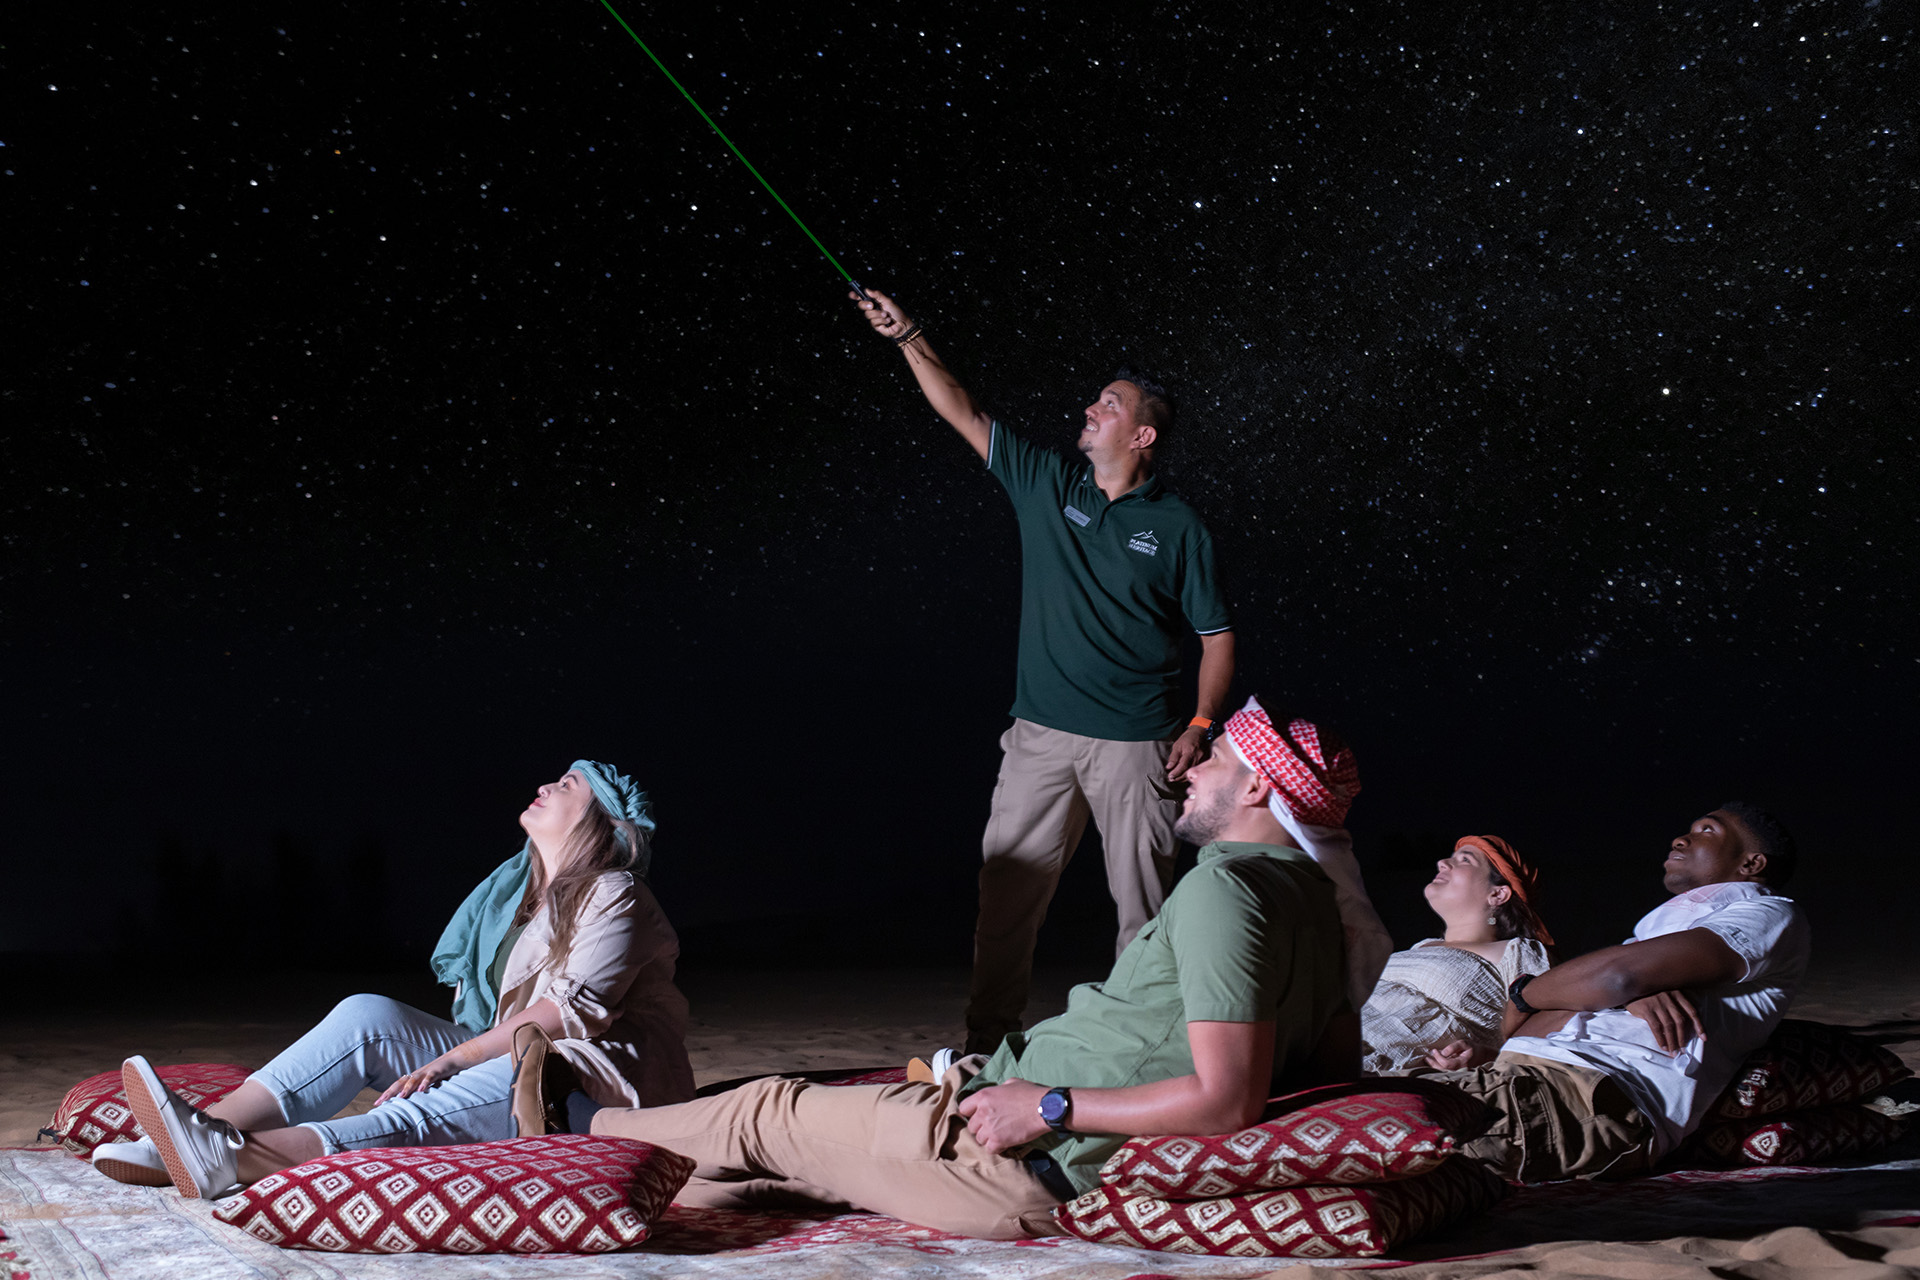 A breathtaking, immersive stargazing session